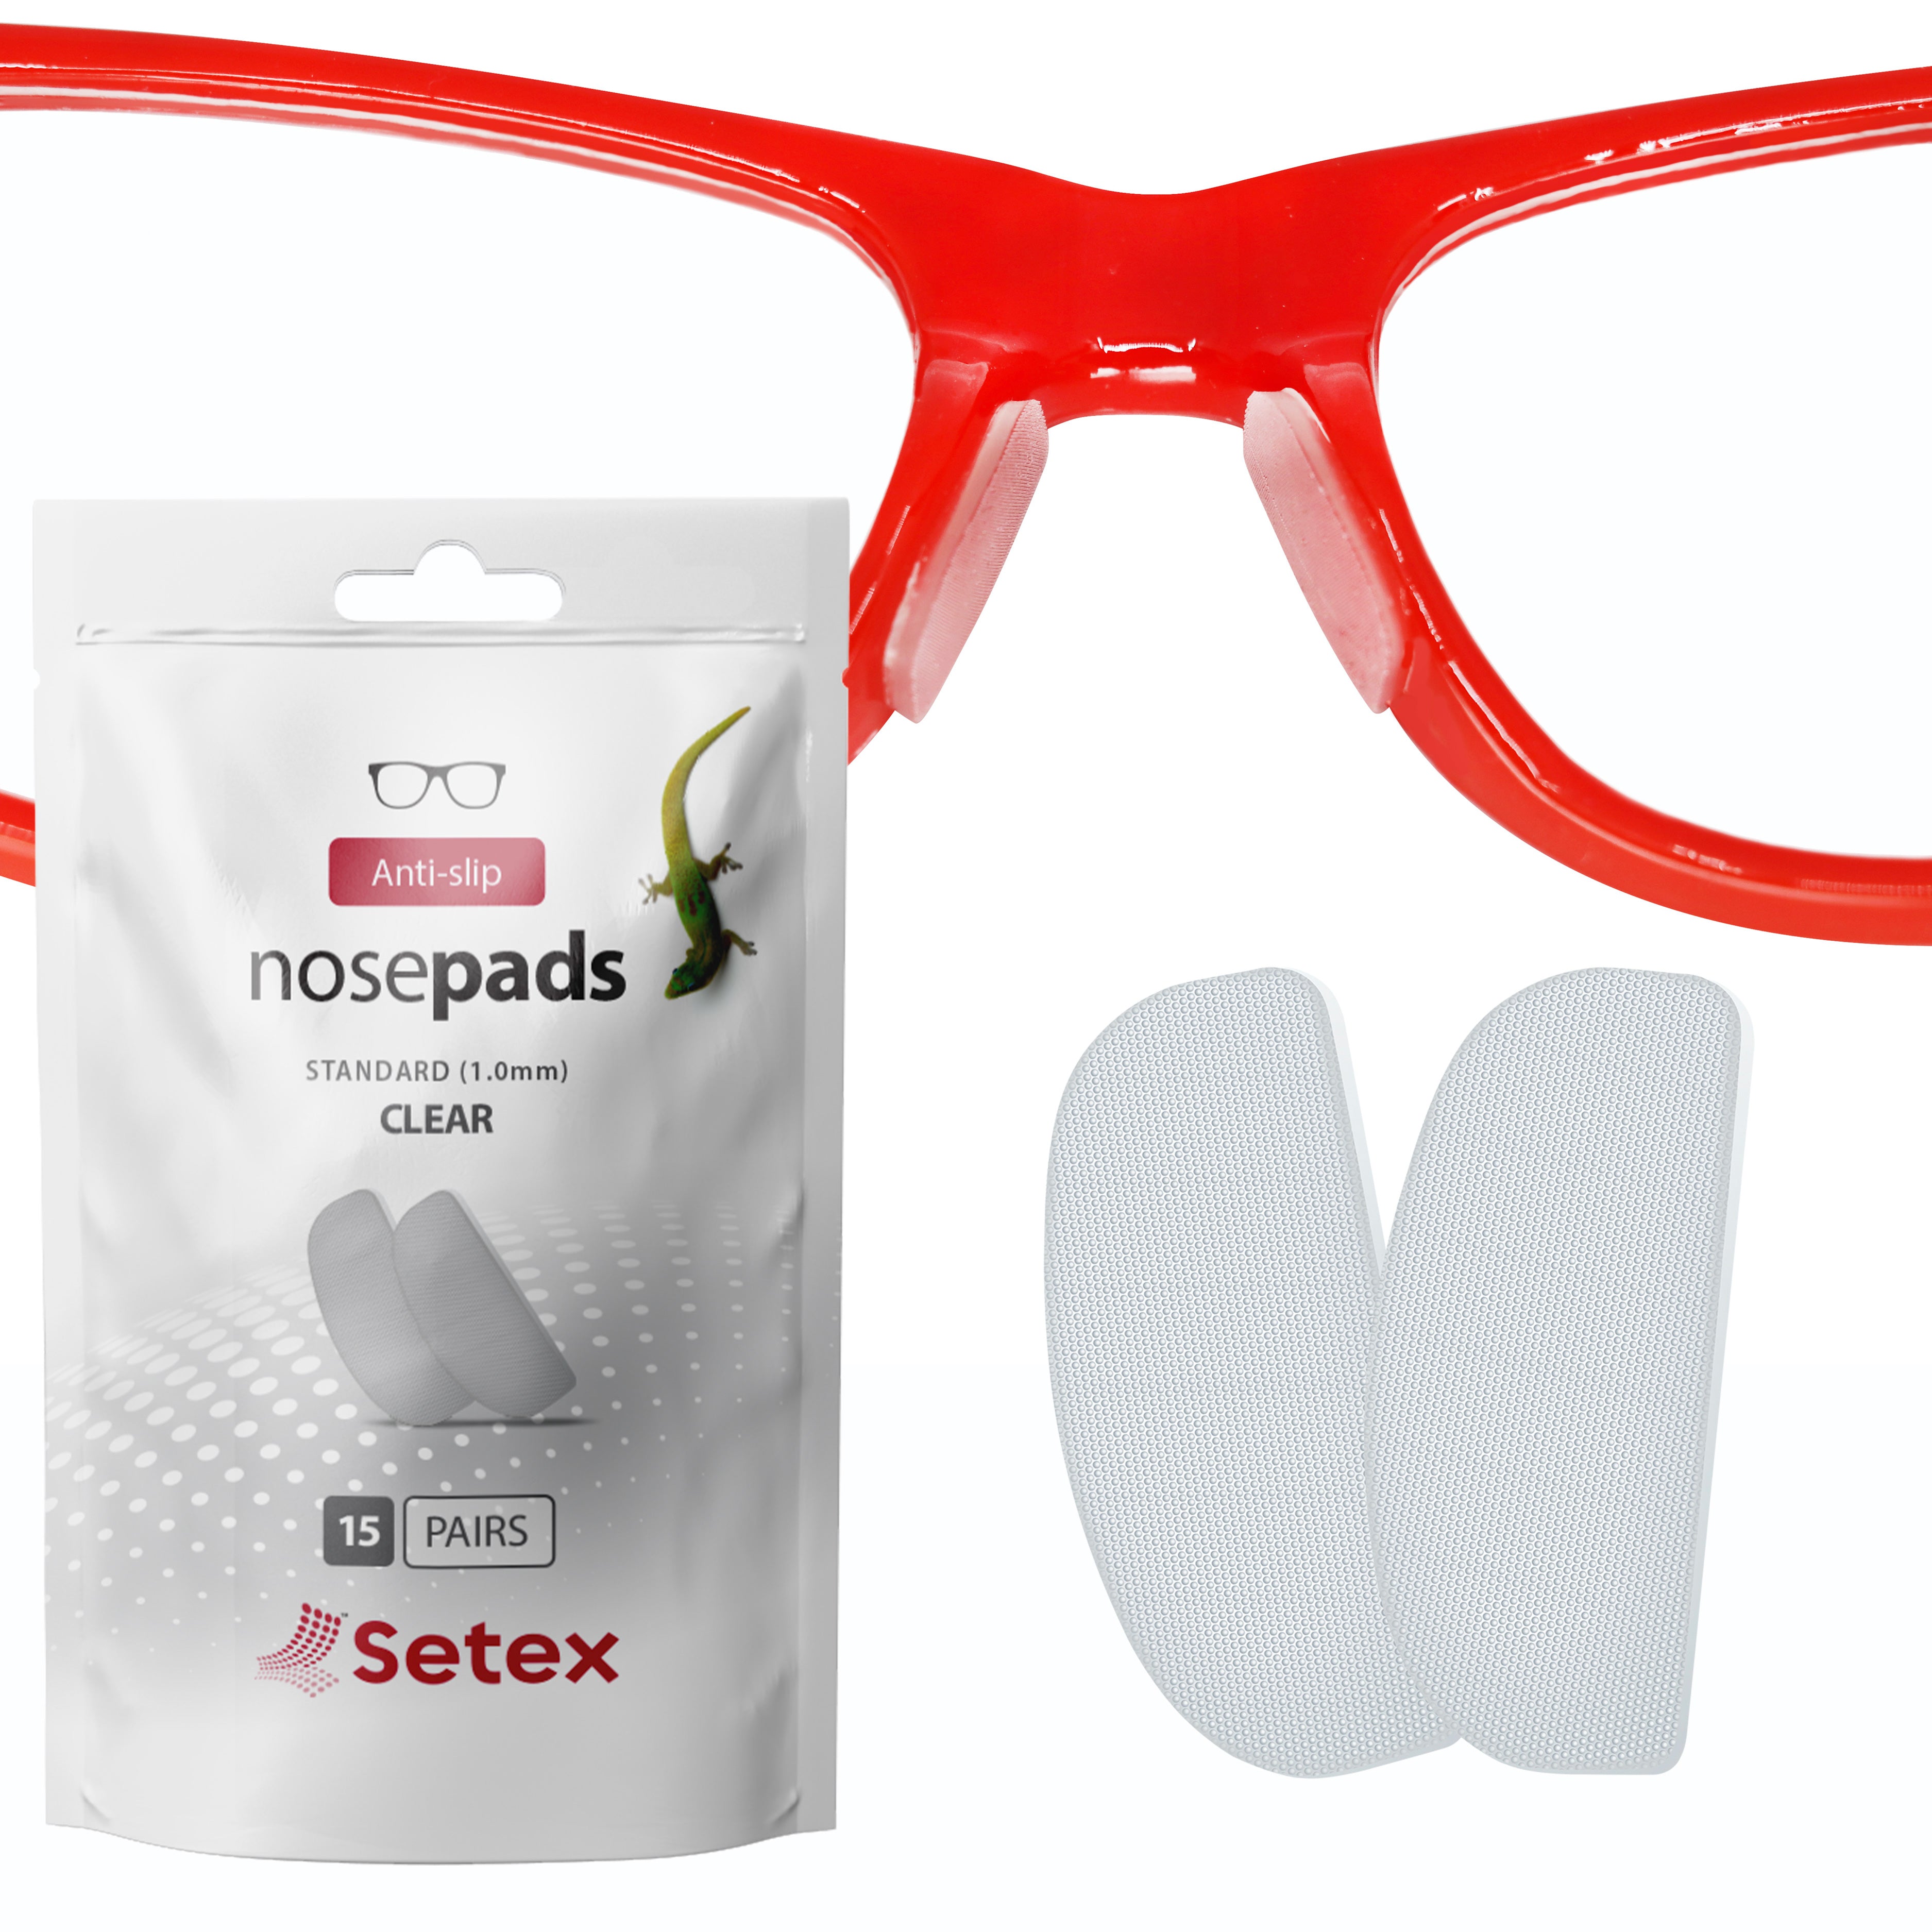 10 PCS NERD Wax Shortsighted Antiskid Silicone Adhesive Nose Pads